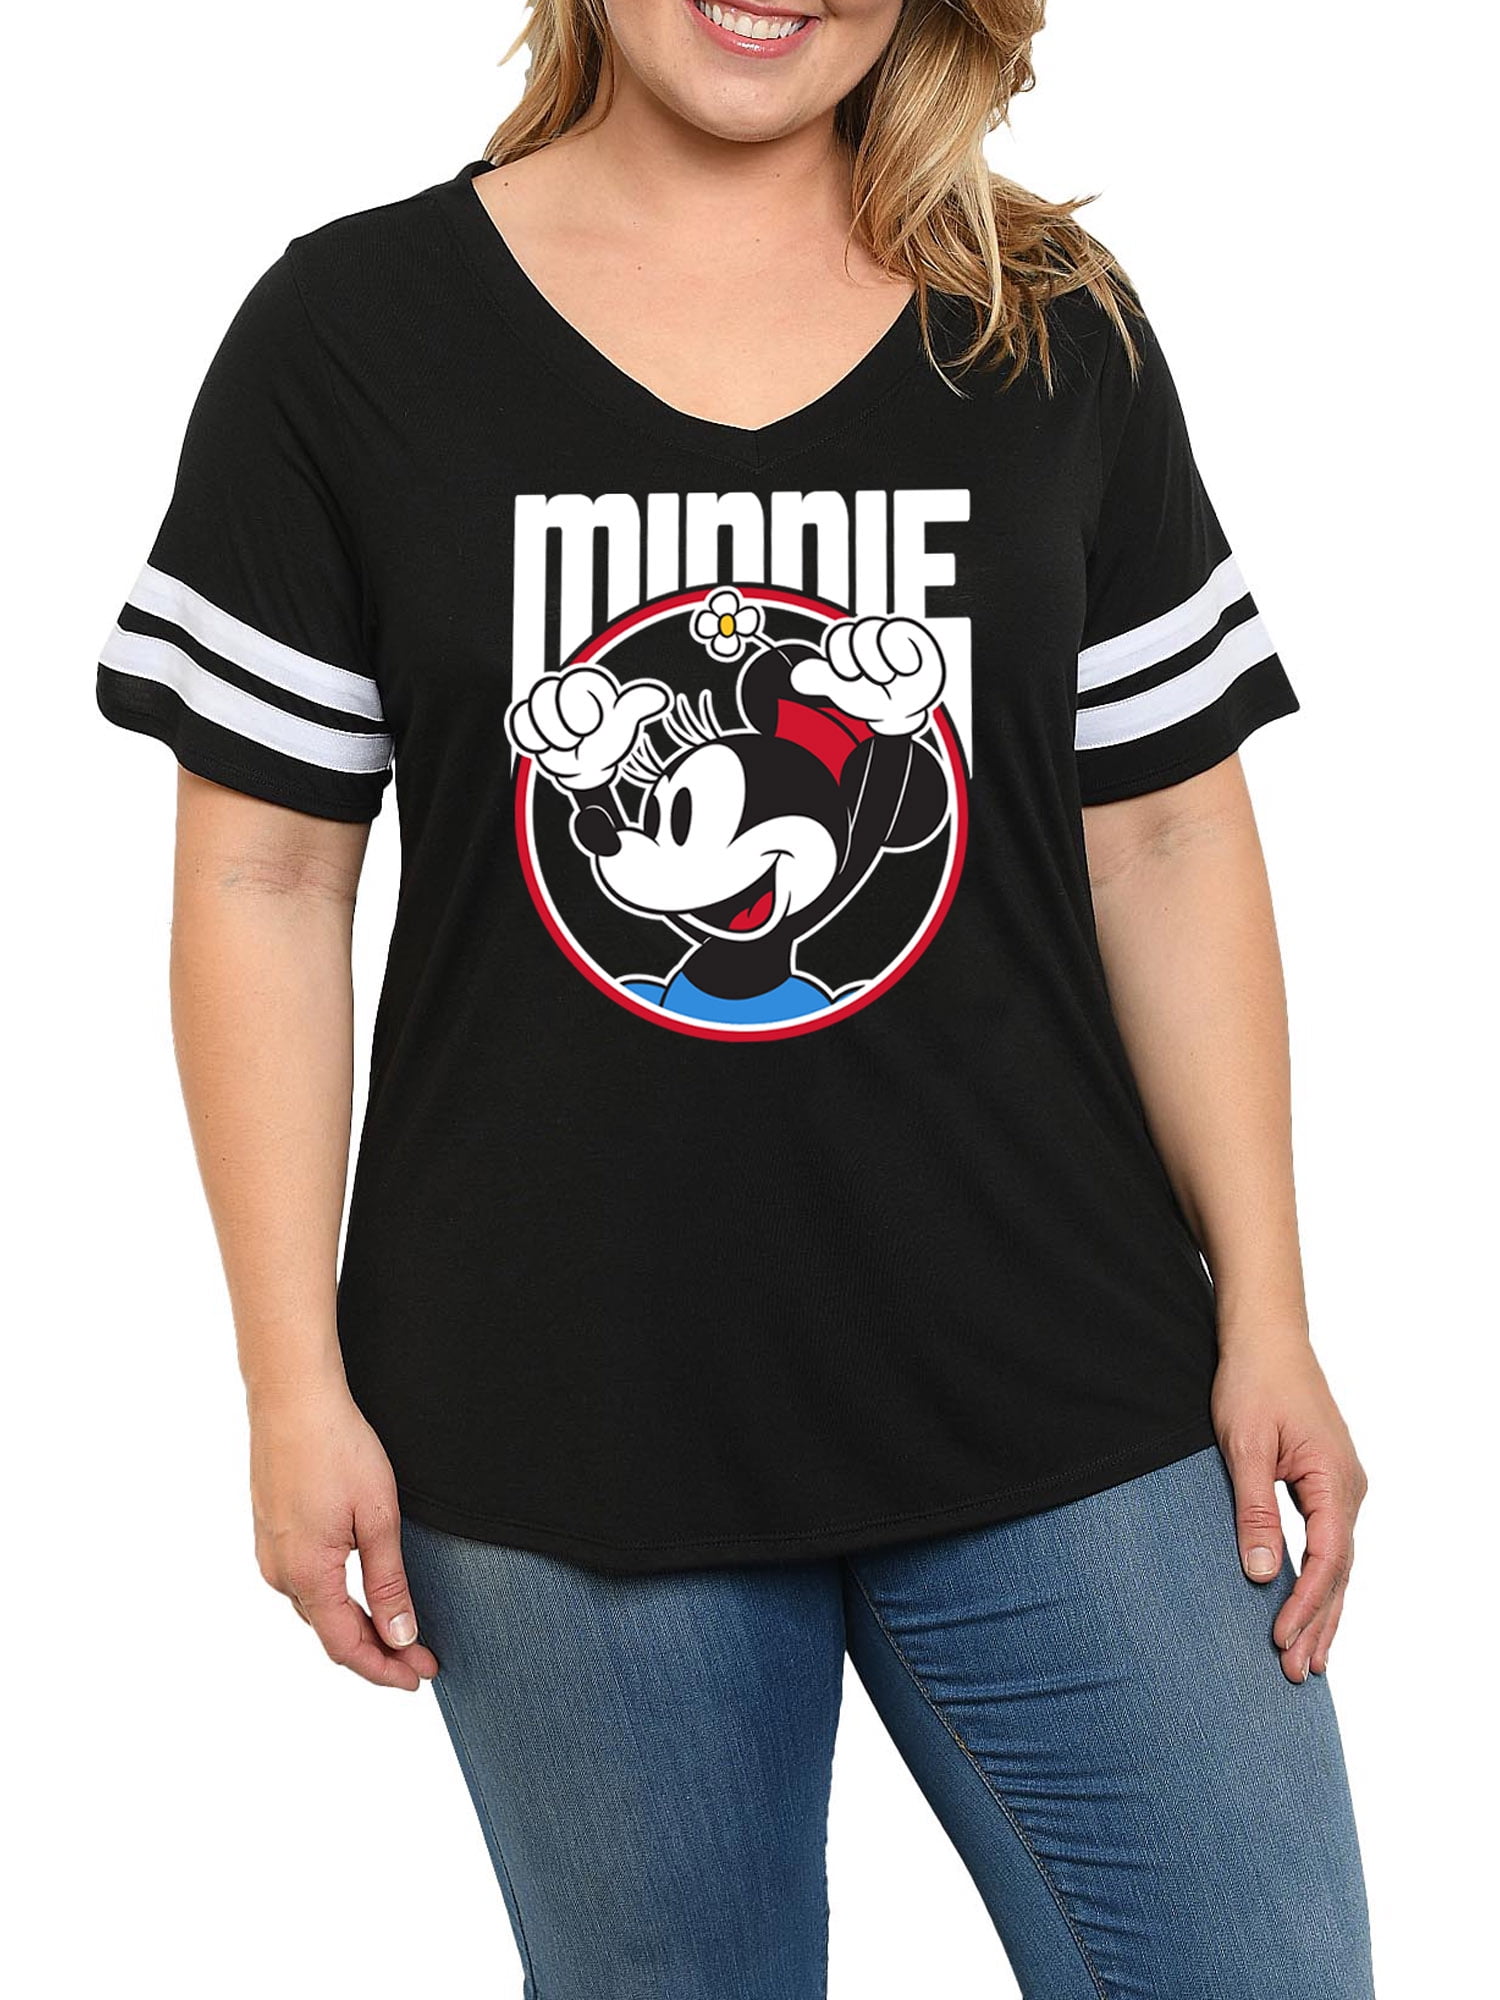 Minnie Mouse Fleece Jogger Pants Womens Plus Size Disney Elastic Cuff Black  